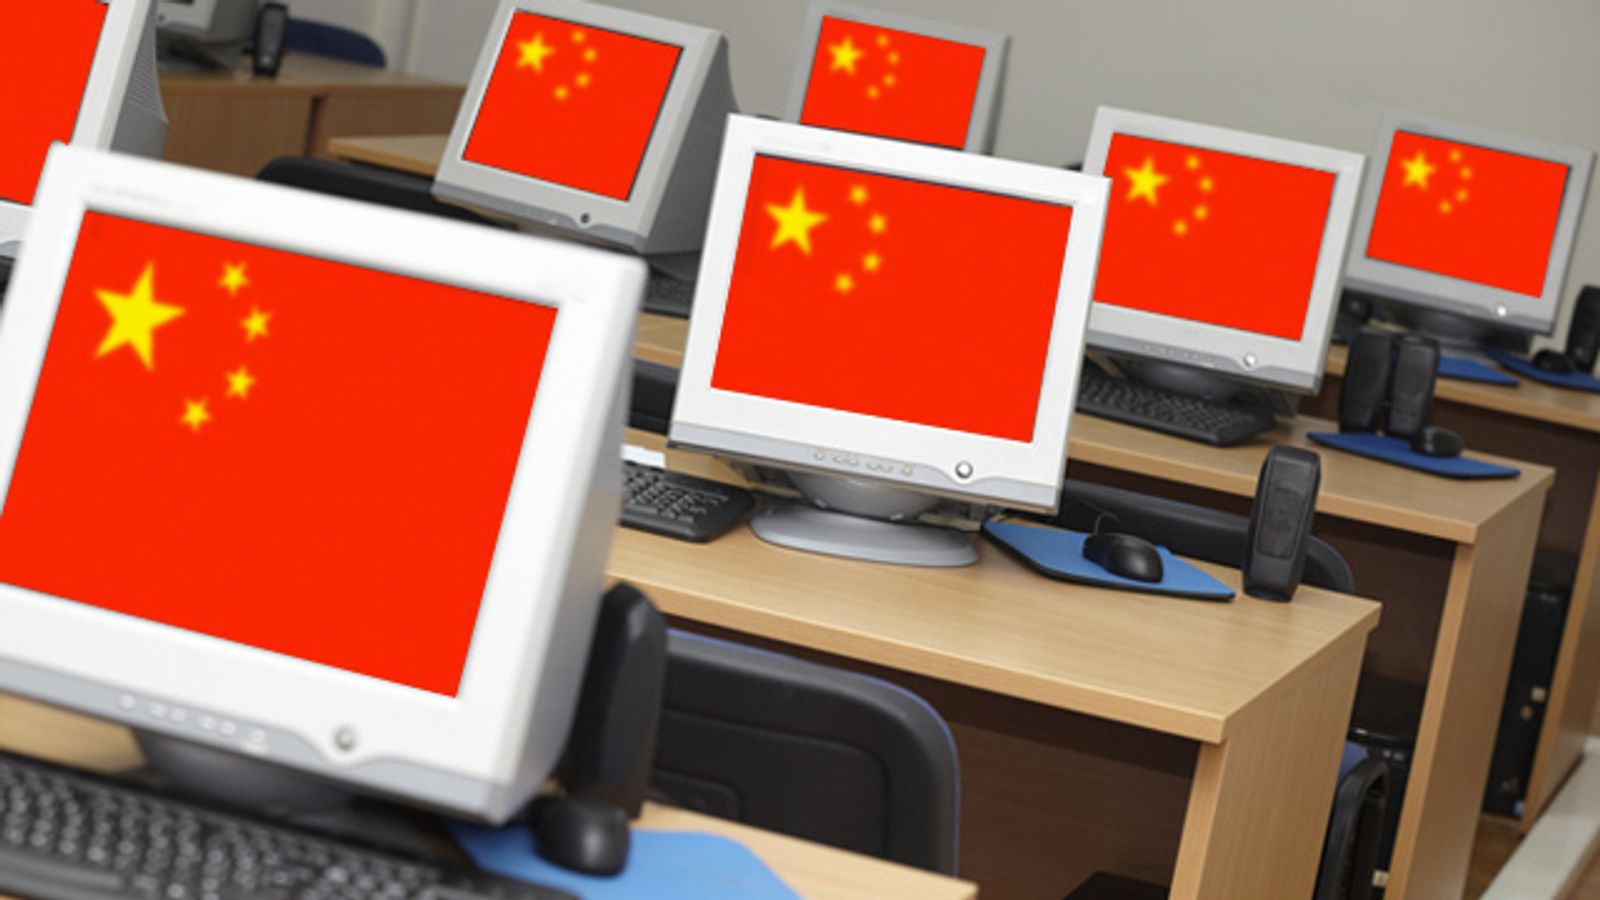 China Ups Ante in World Censorship Olympics